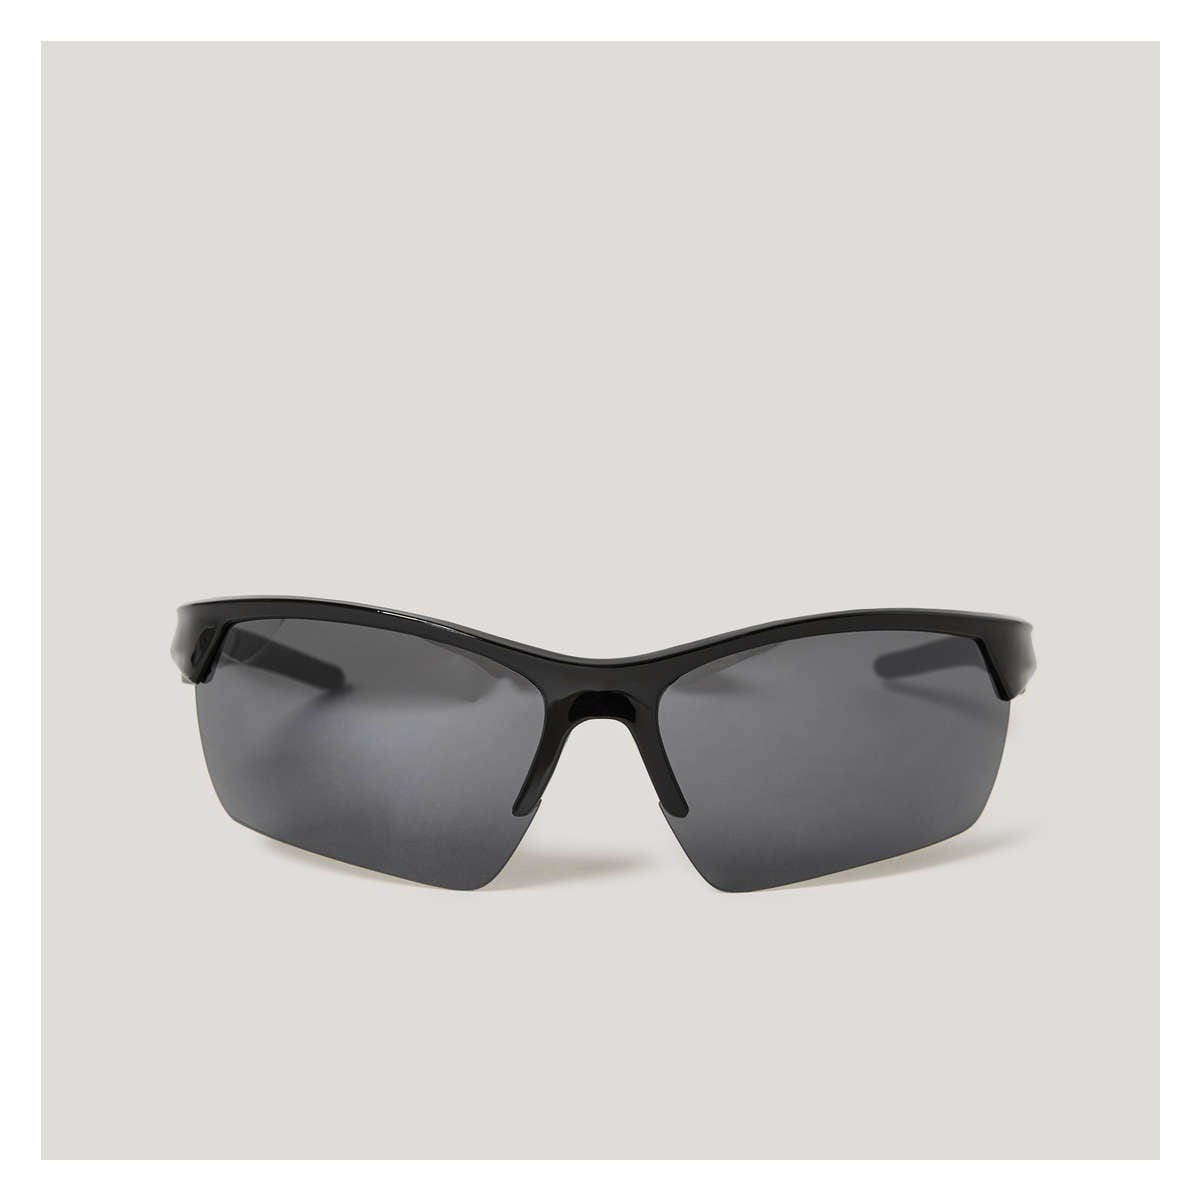 Semi-Rimless Sport Blade Sunglasses in Black from Joe Fresh